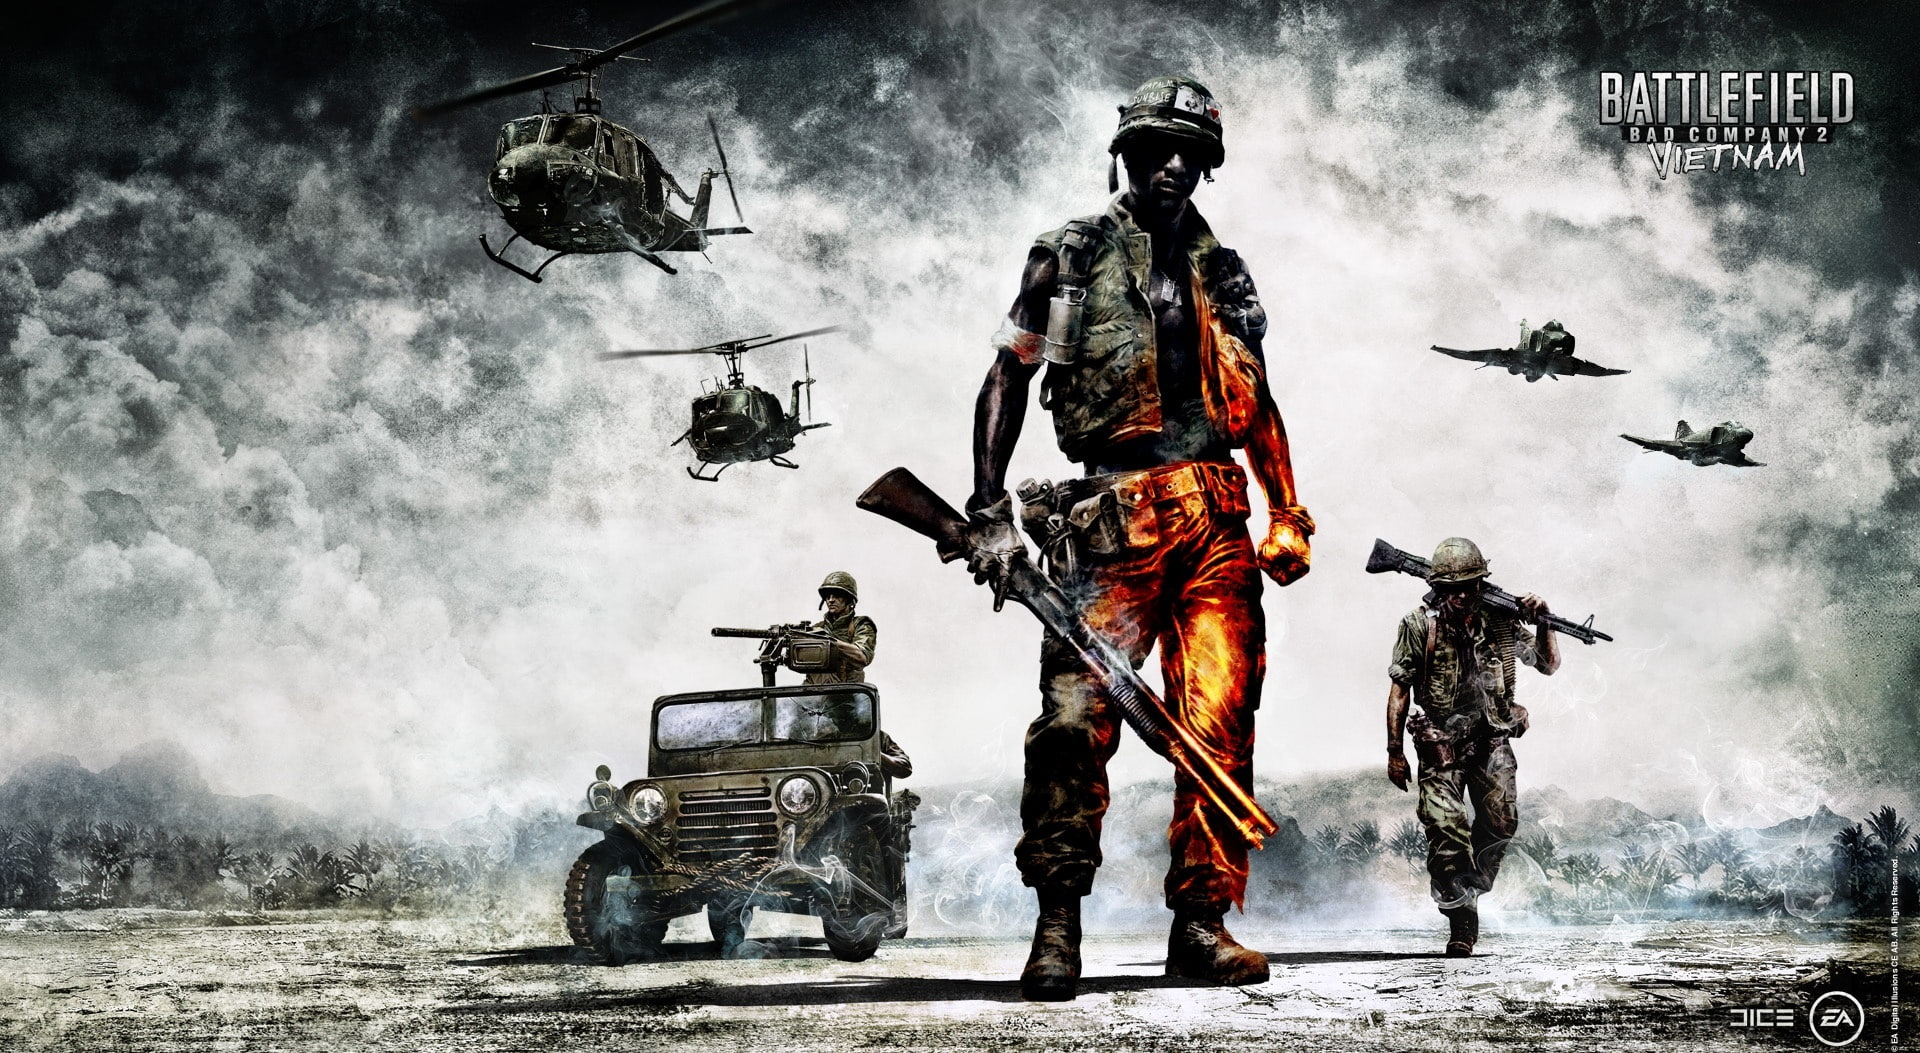 Battlefield Bad Company 2   Vietnam, Battlefield Vietnam game poster